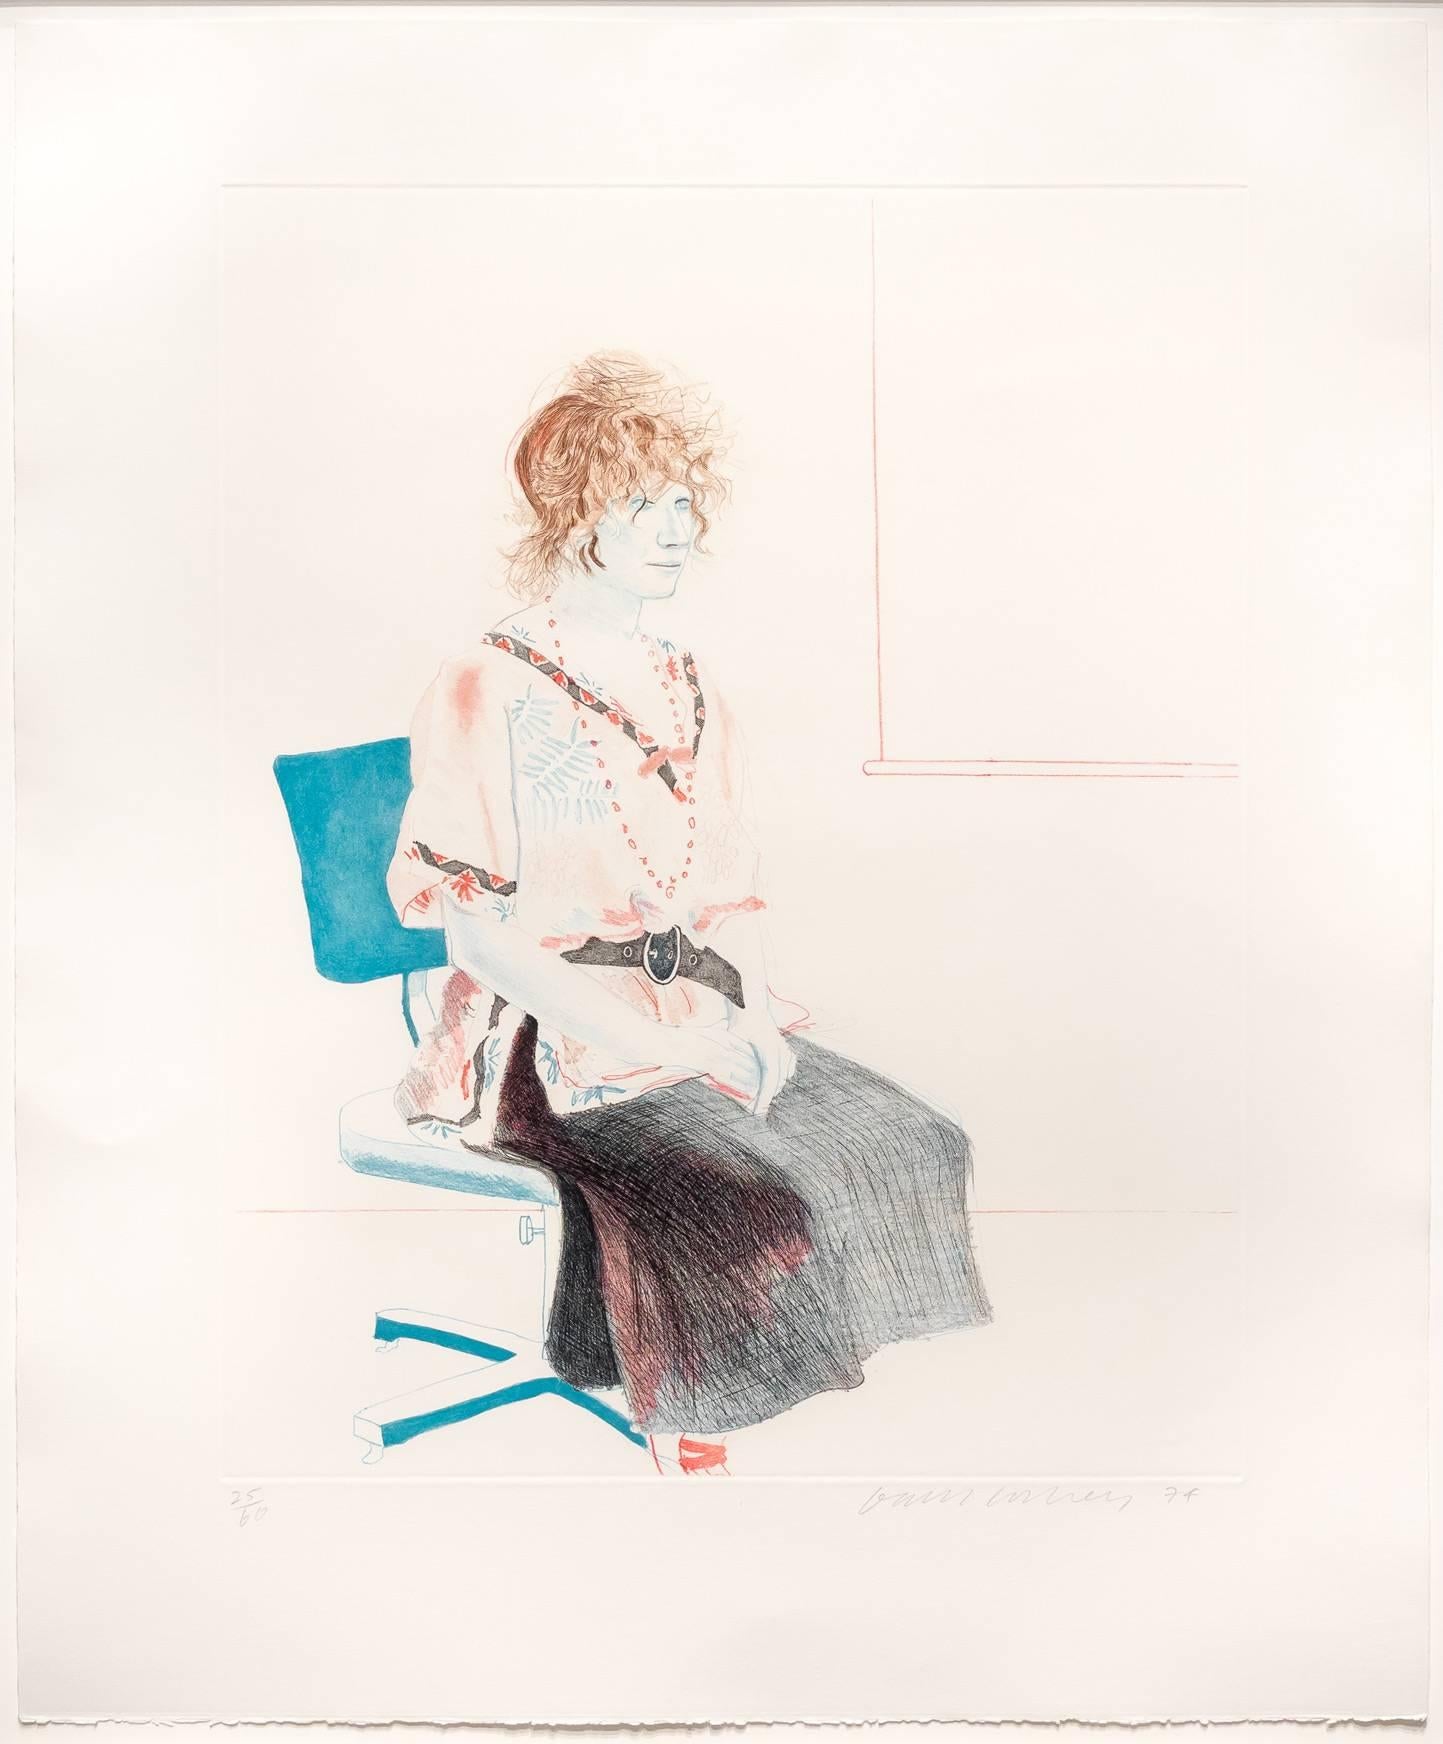 Celia Seated on an Office Chair - Print by David Hockney